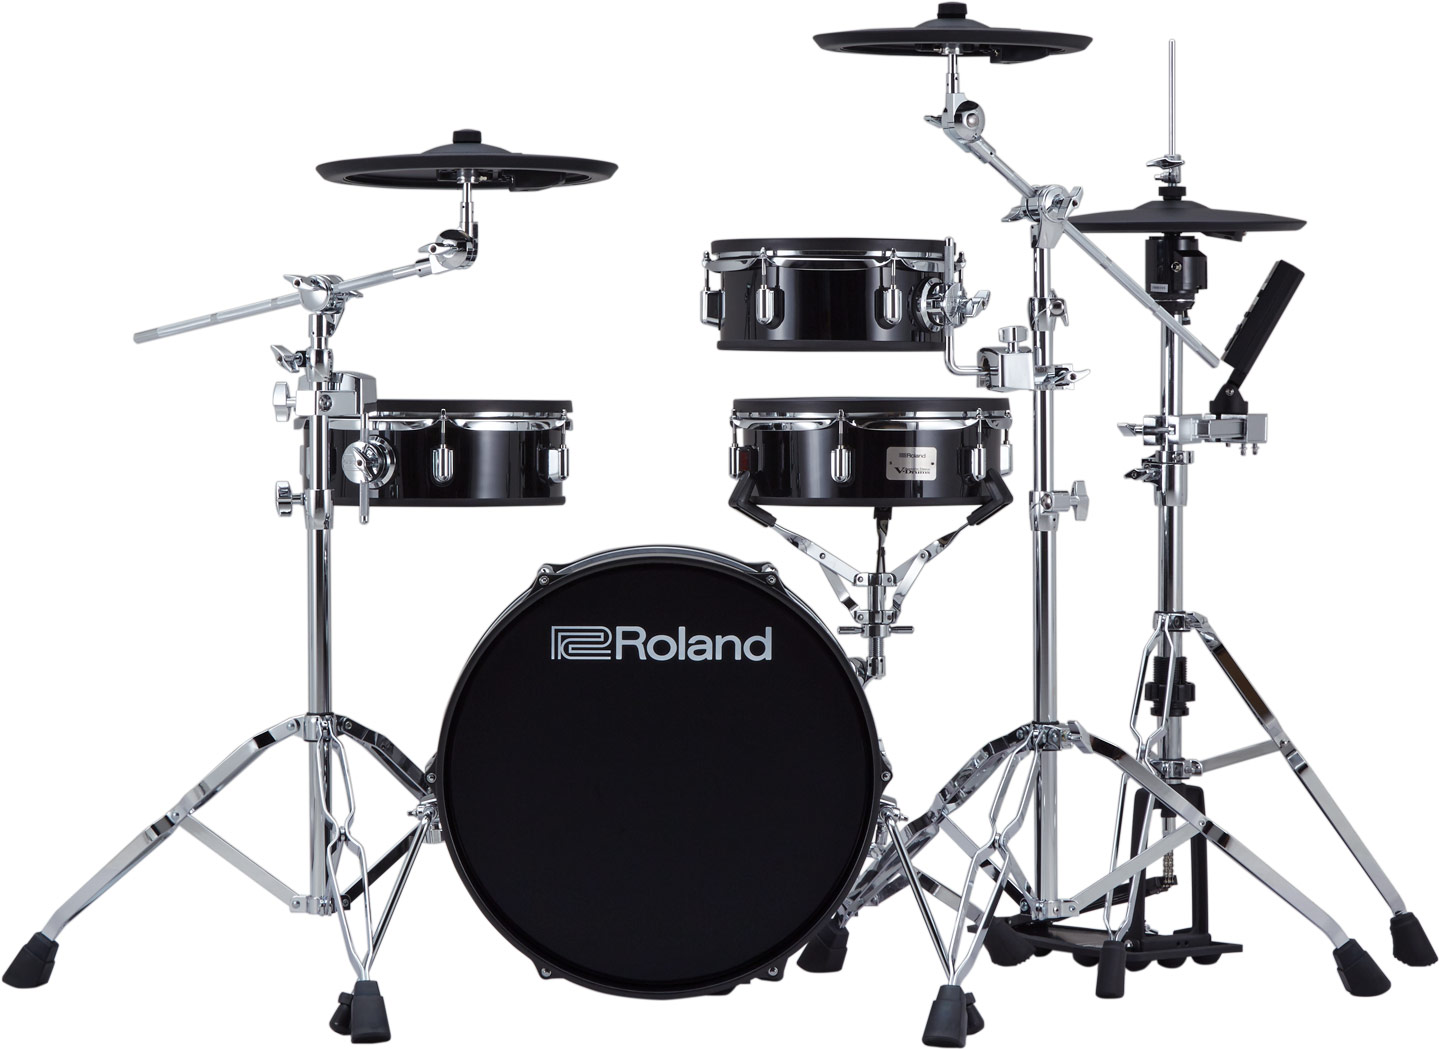 Roland VAD103 drumkit